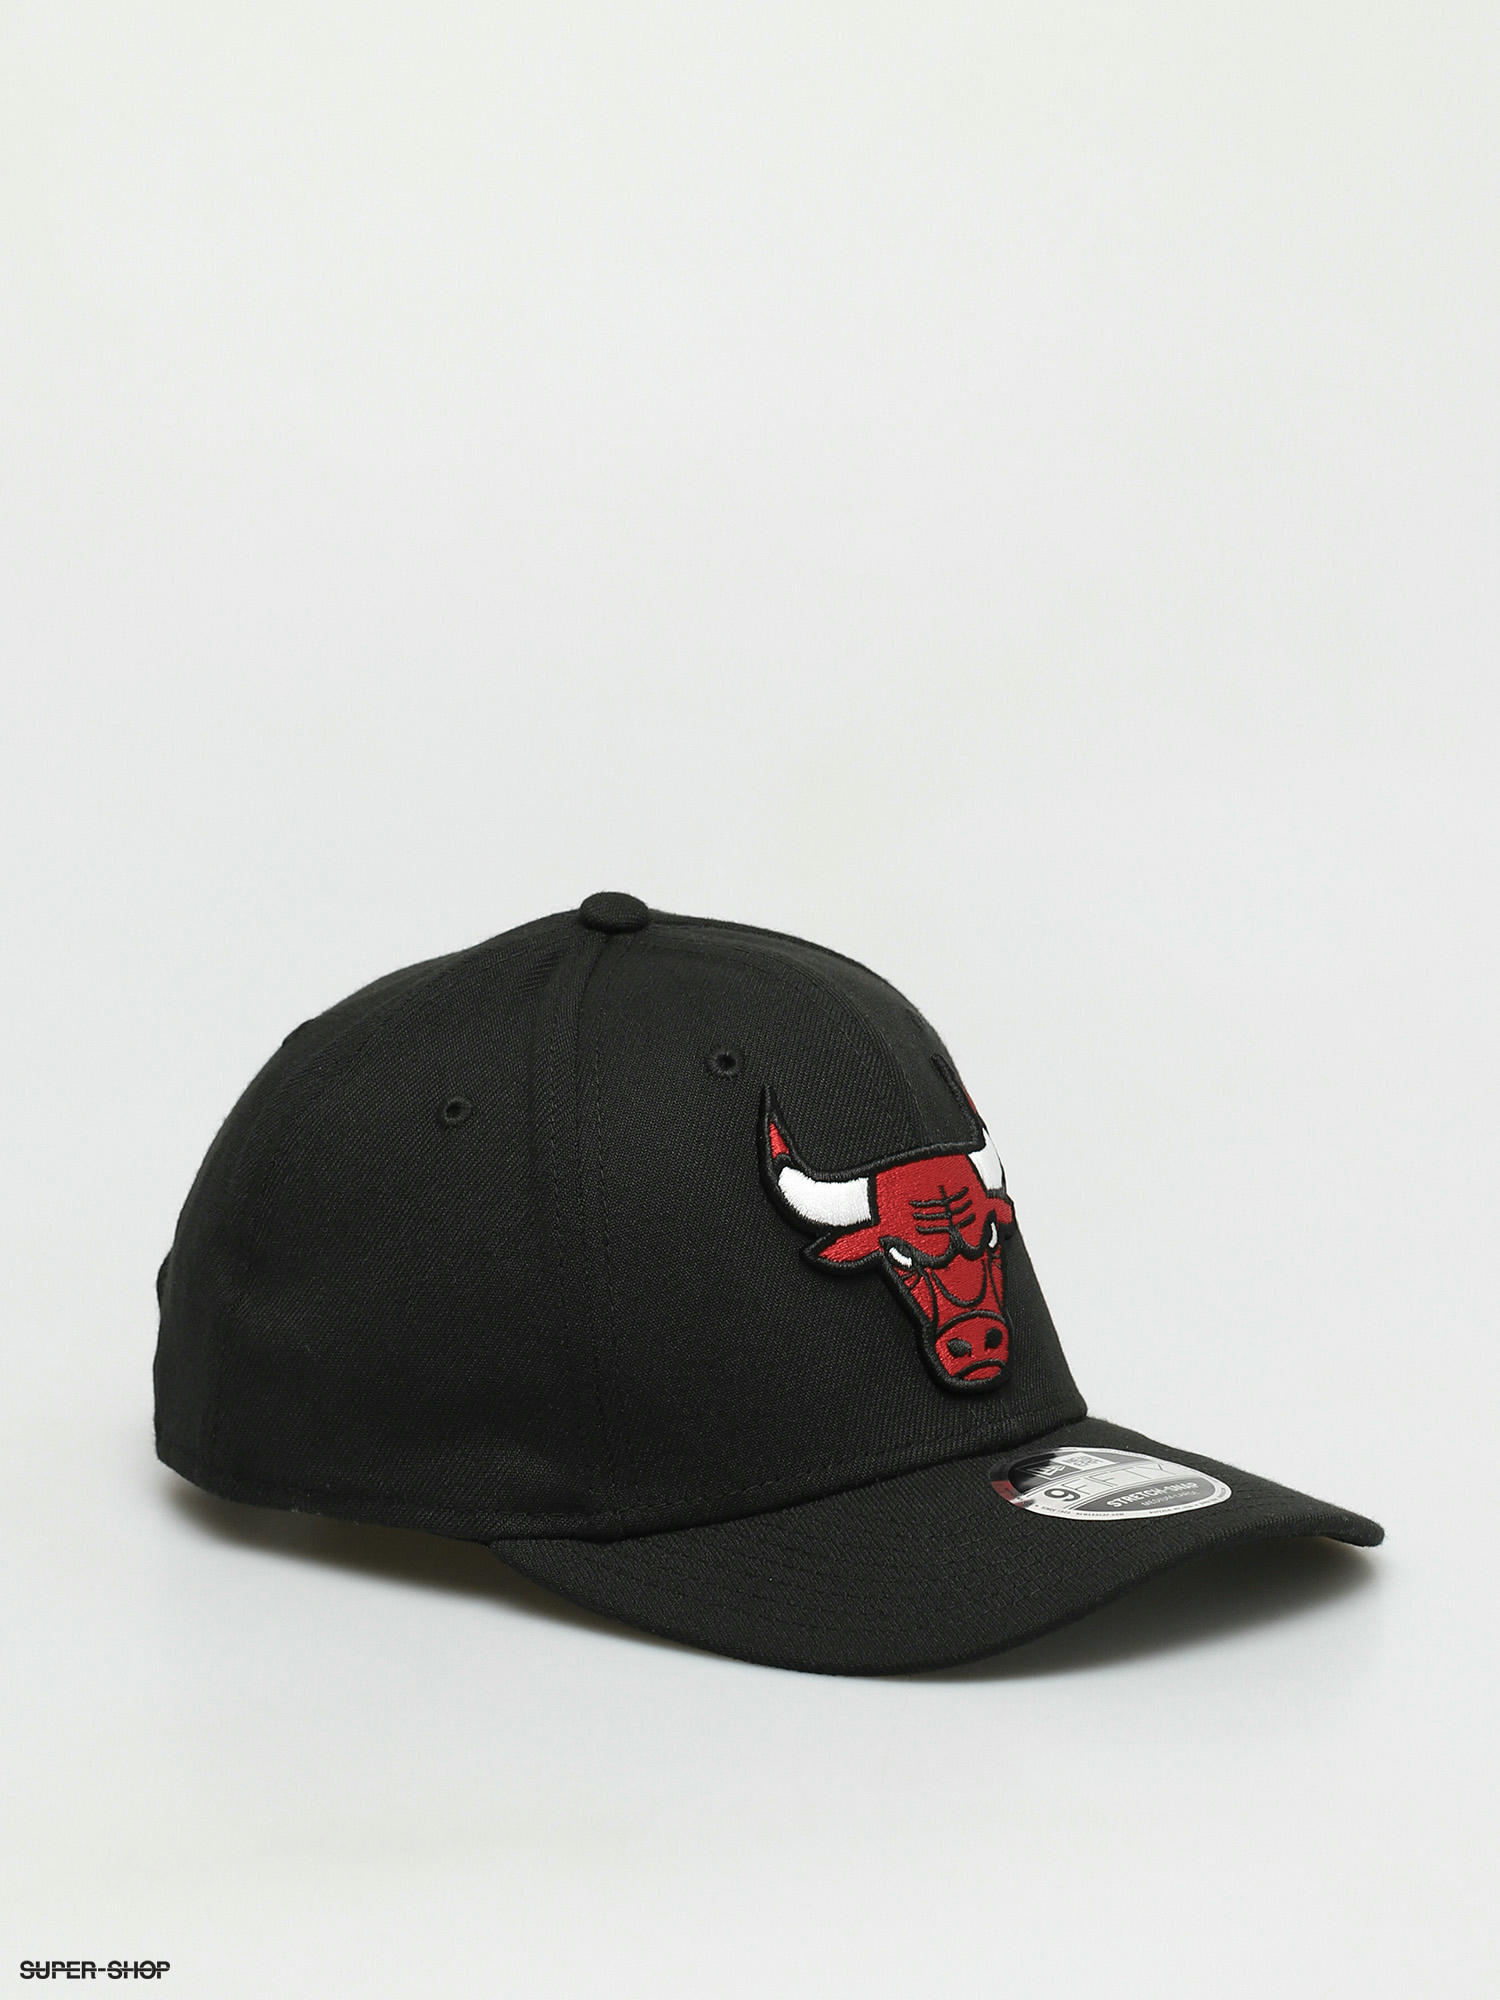 Youth Chicago Bulls Black/Red Santa Cruz Tie-Dye Snapback Hat